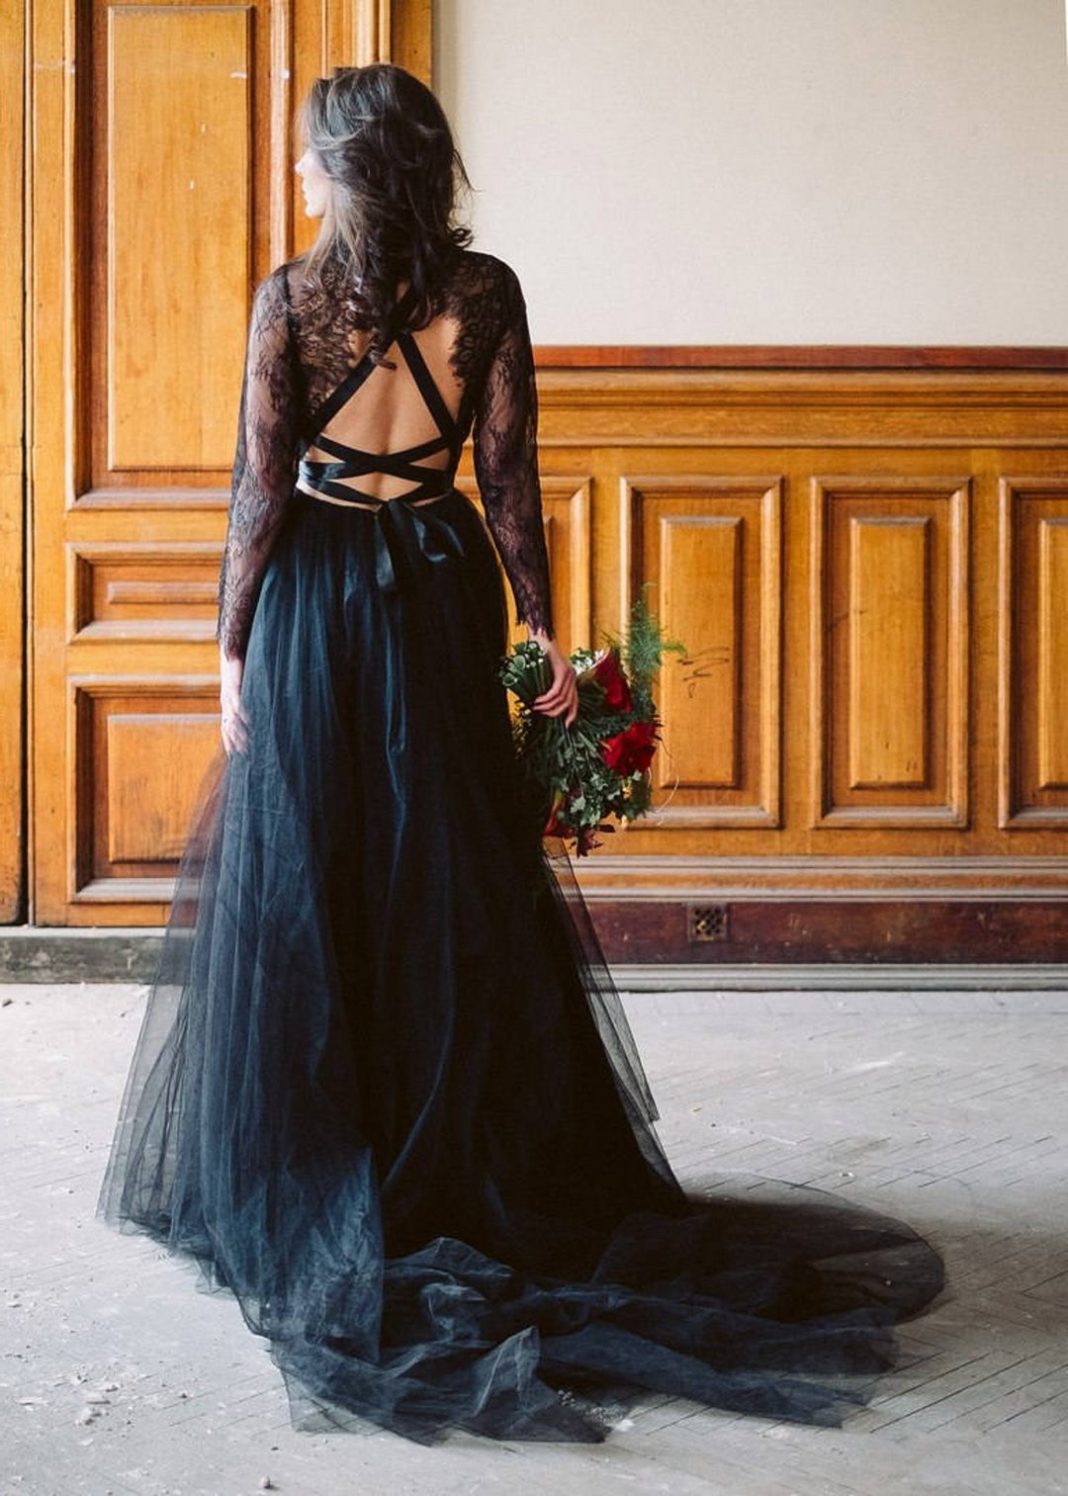 Black Lace Wedding Dress 1068x1496 